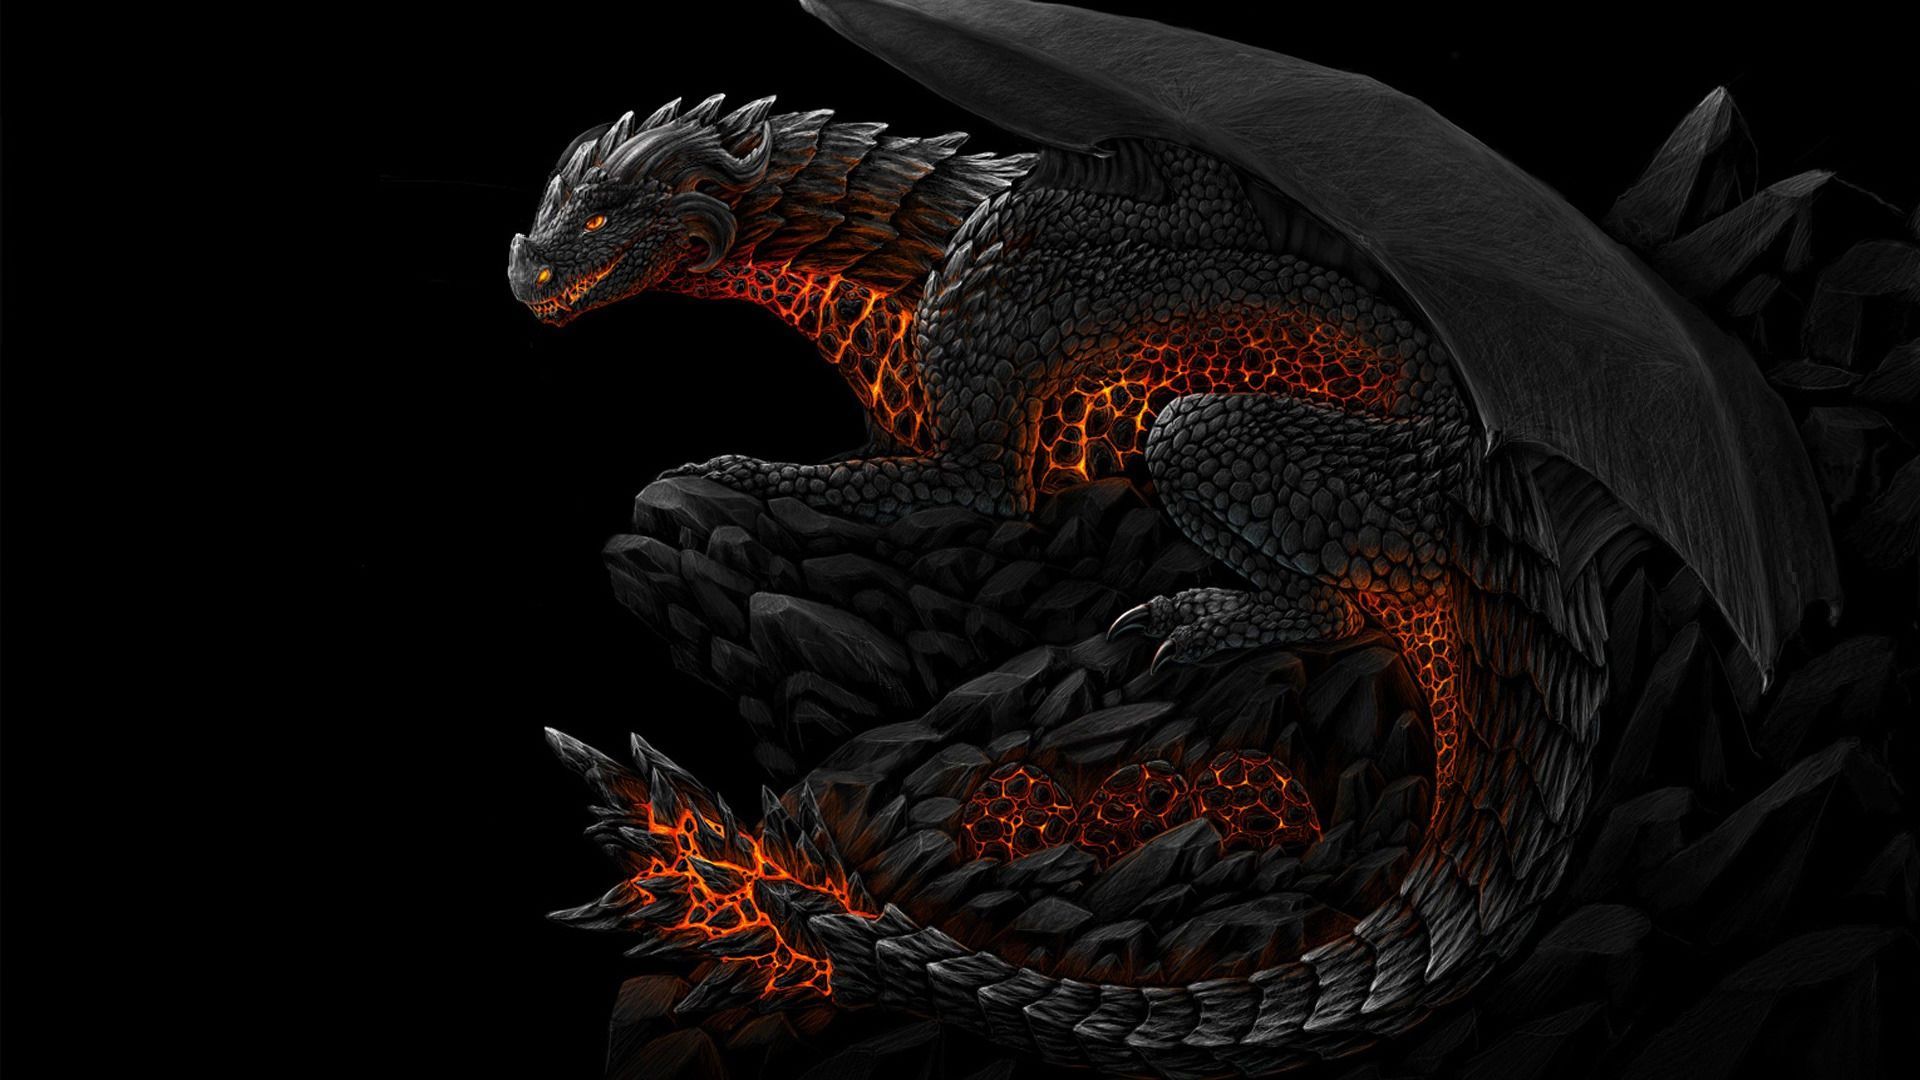 Dragon Wallpaper Wide Images - Ehiyo.com